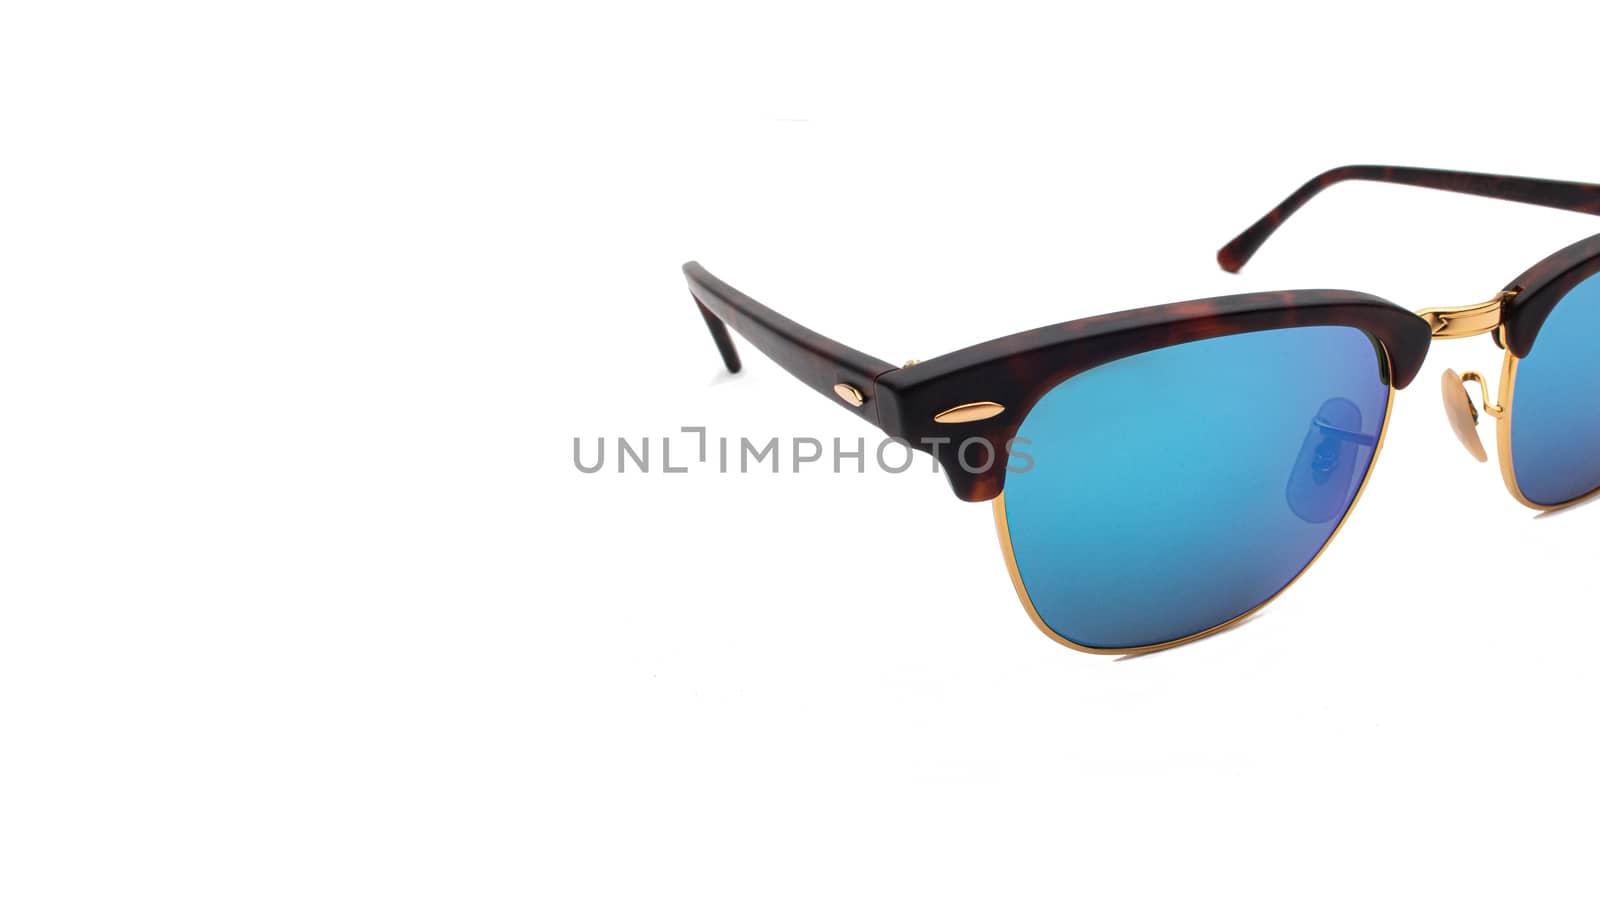 sunglasses online shop white background fashion design glasses blue brown